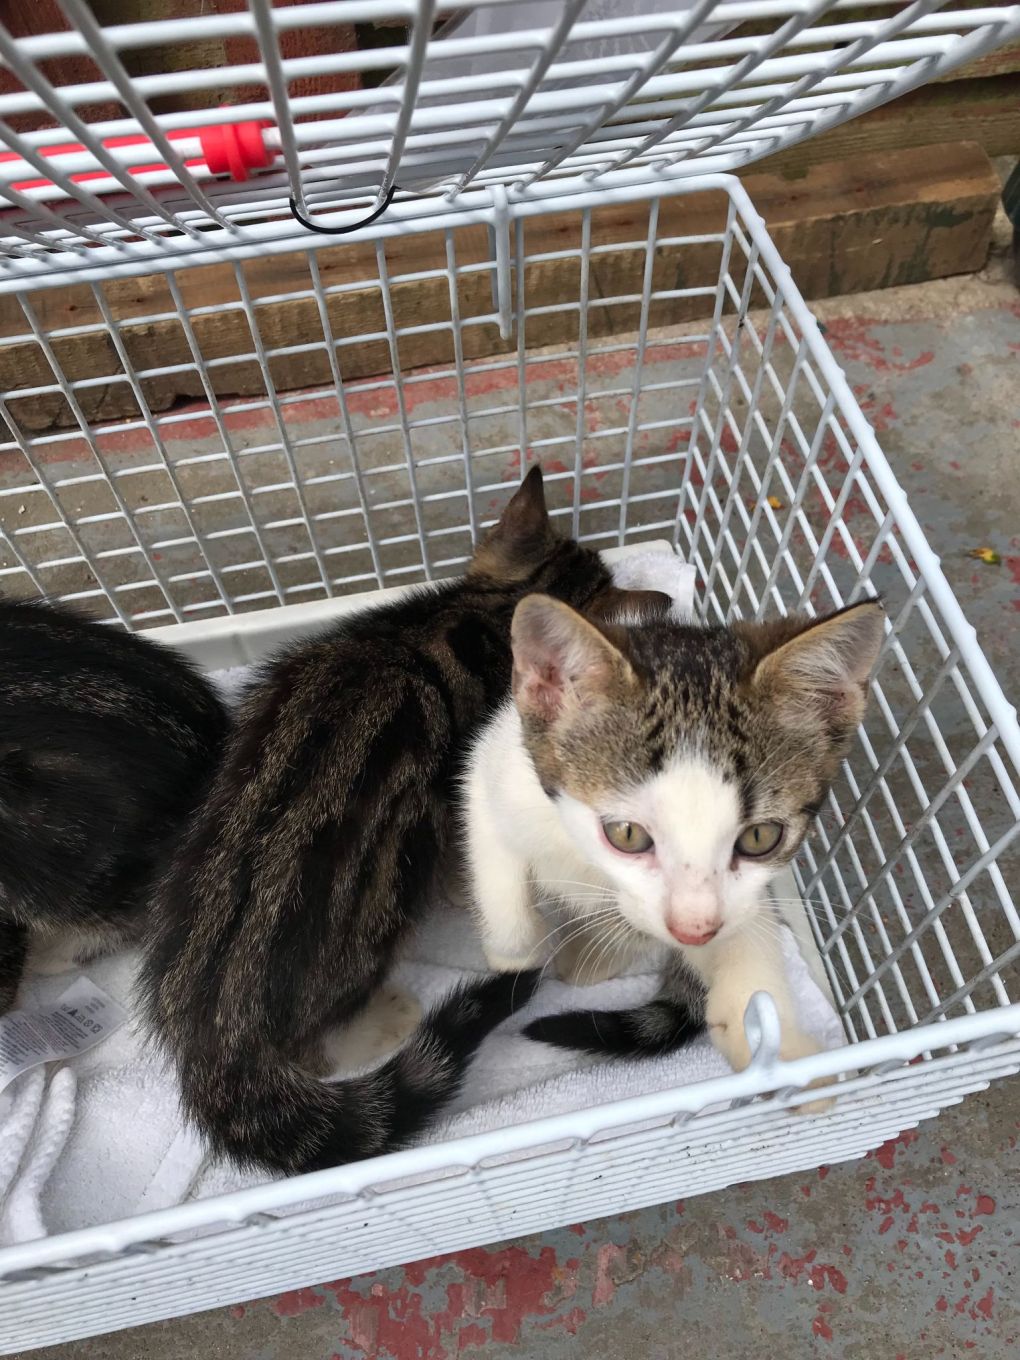 RSPCA Appeals for Information After six Kittens Abandoned Inside Cat Carrier